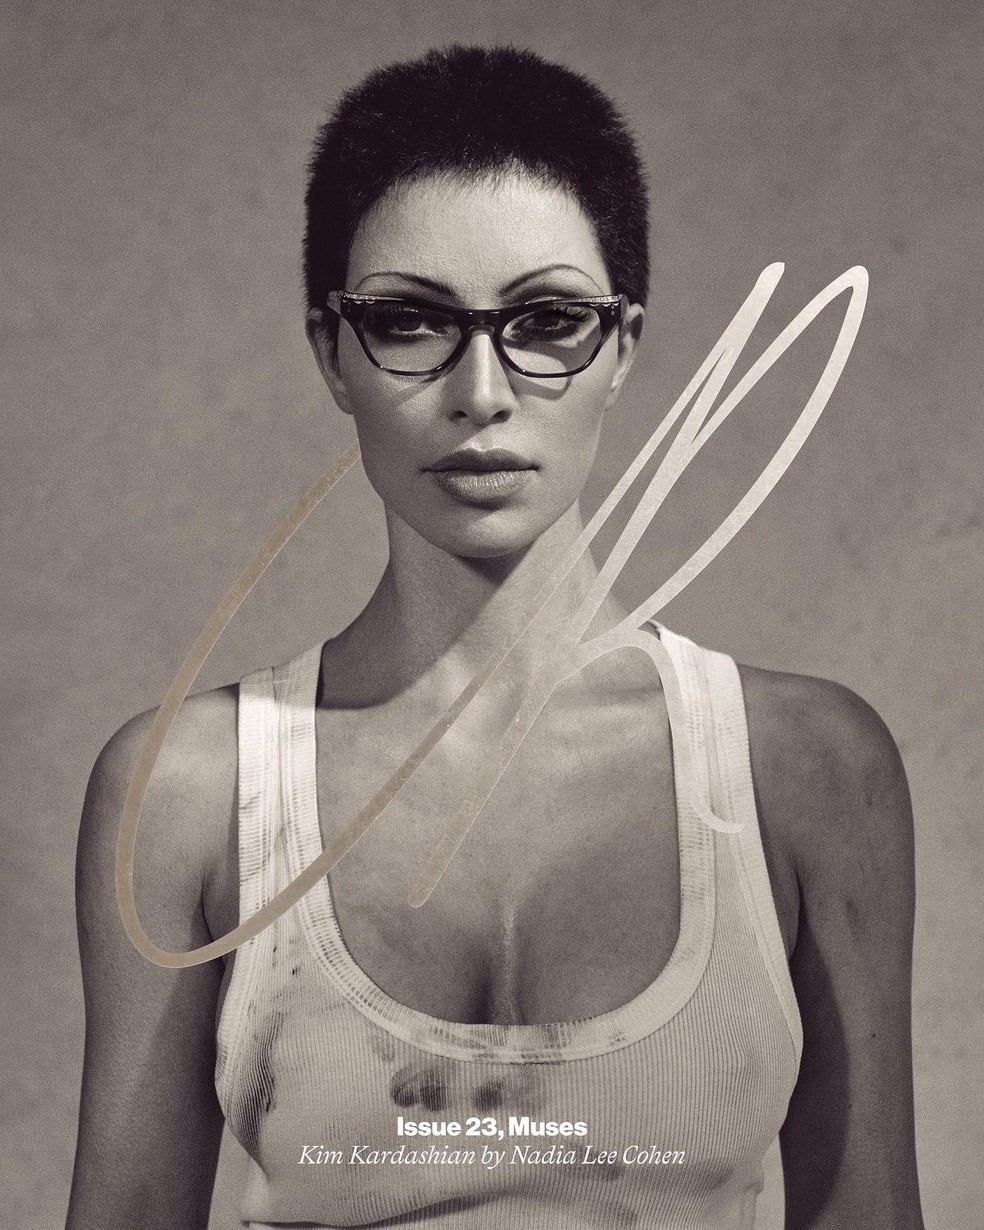 Kim Kardashian - Photo: Nadia Lee Cohen